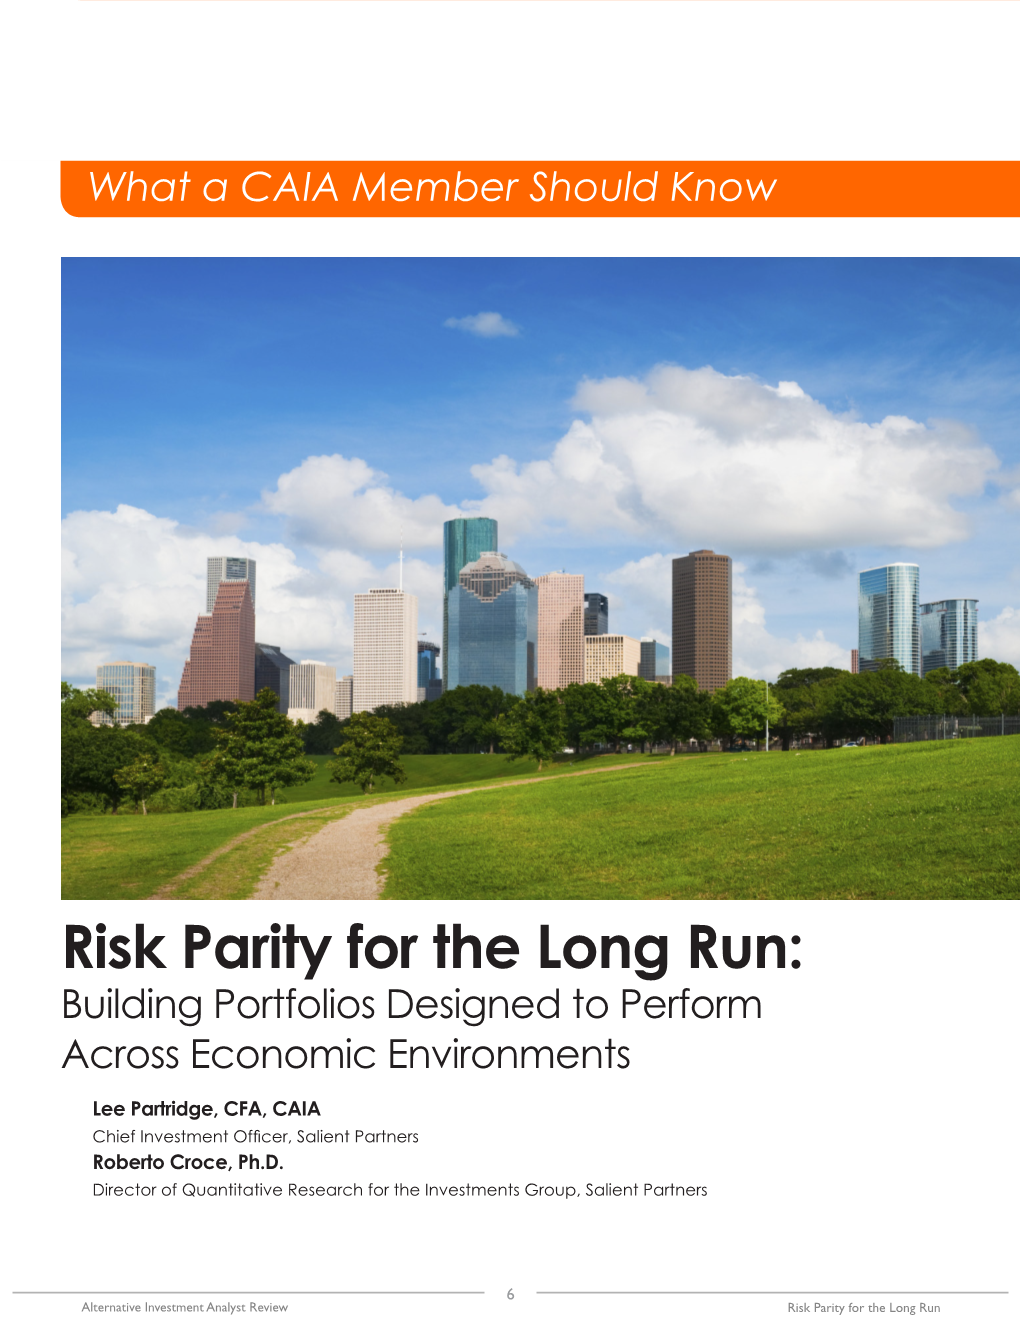 Risk Parity for the Long Run: Building Portfolios Designed to Perform Across Economic Environments